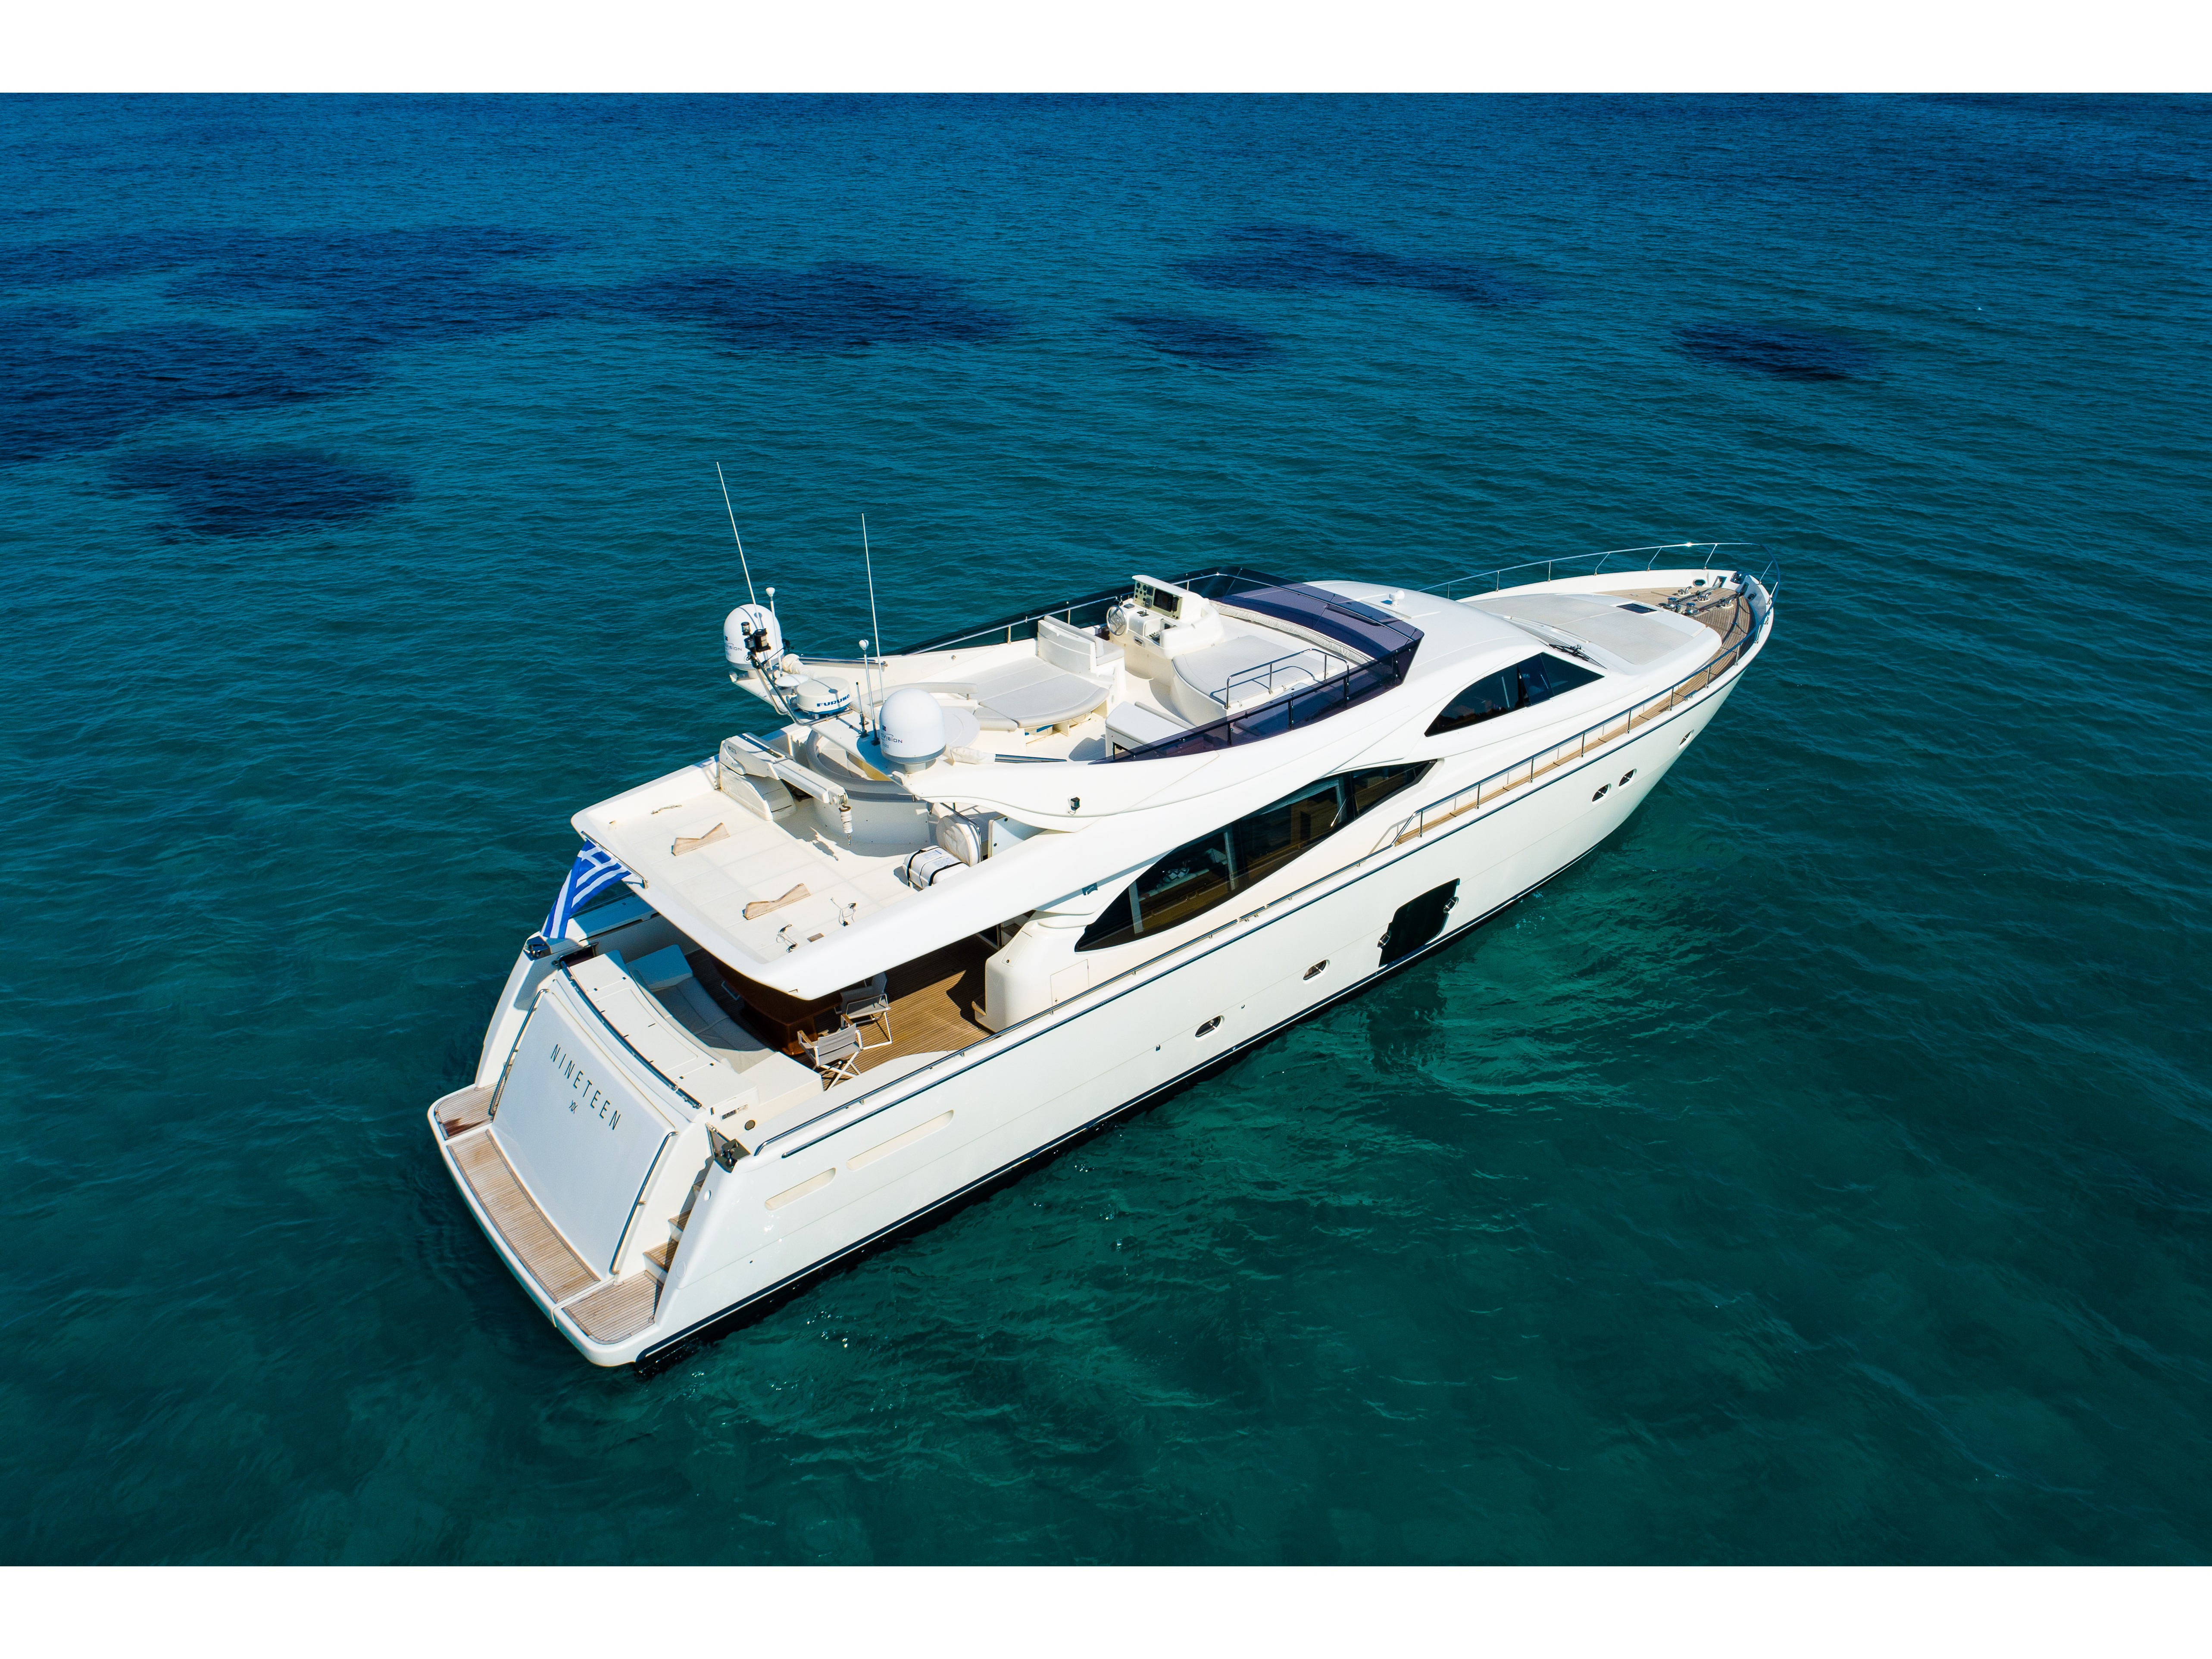 Ferretti 780 - Superyacht charter Saint Lucia & Boat hire in Greece Athens and Saronic Gulf Athens Hellinikon Agios Kosmas Marina 1